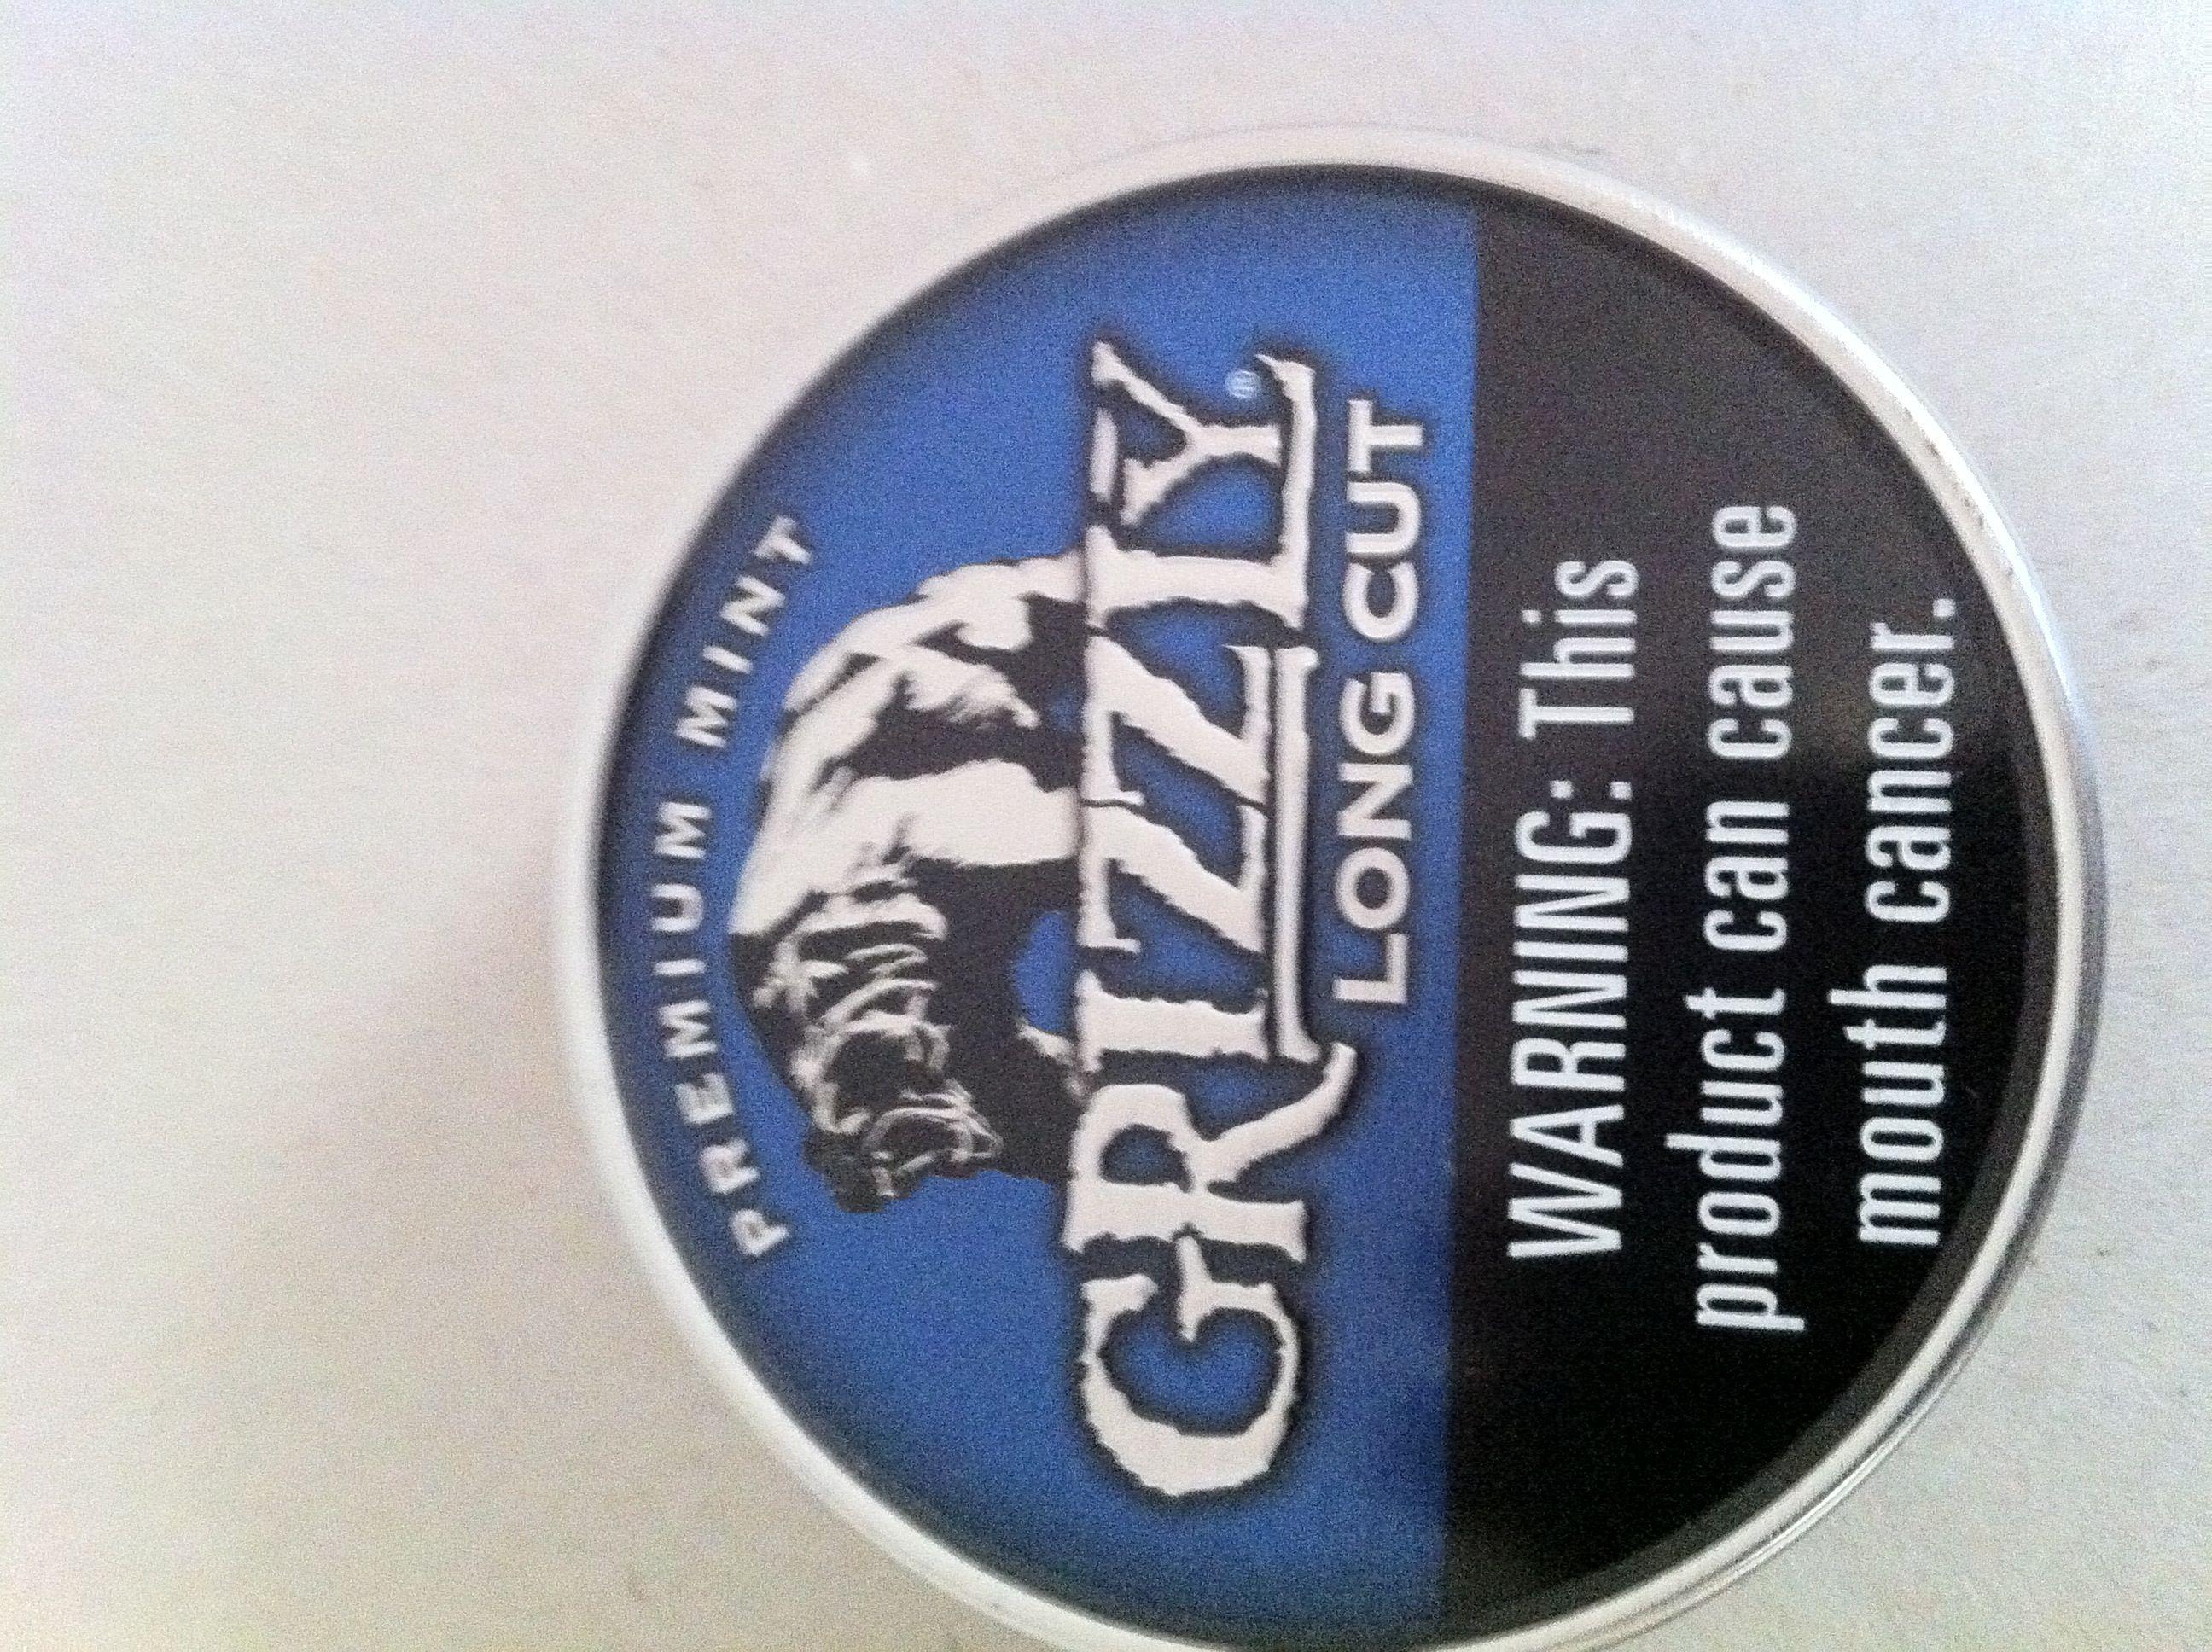 New Grizzly Tobacco Logo - Grizzly (tobacco)